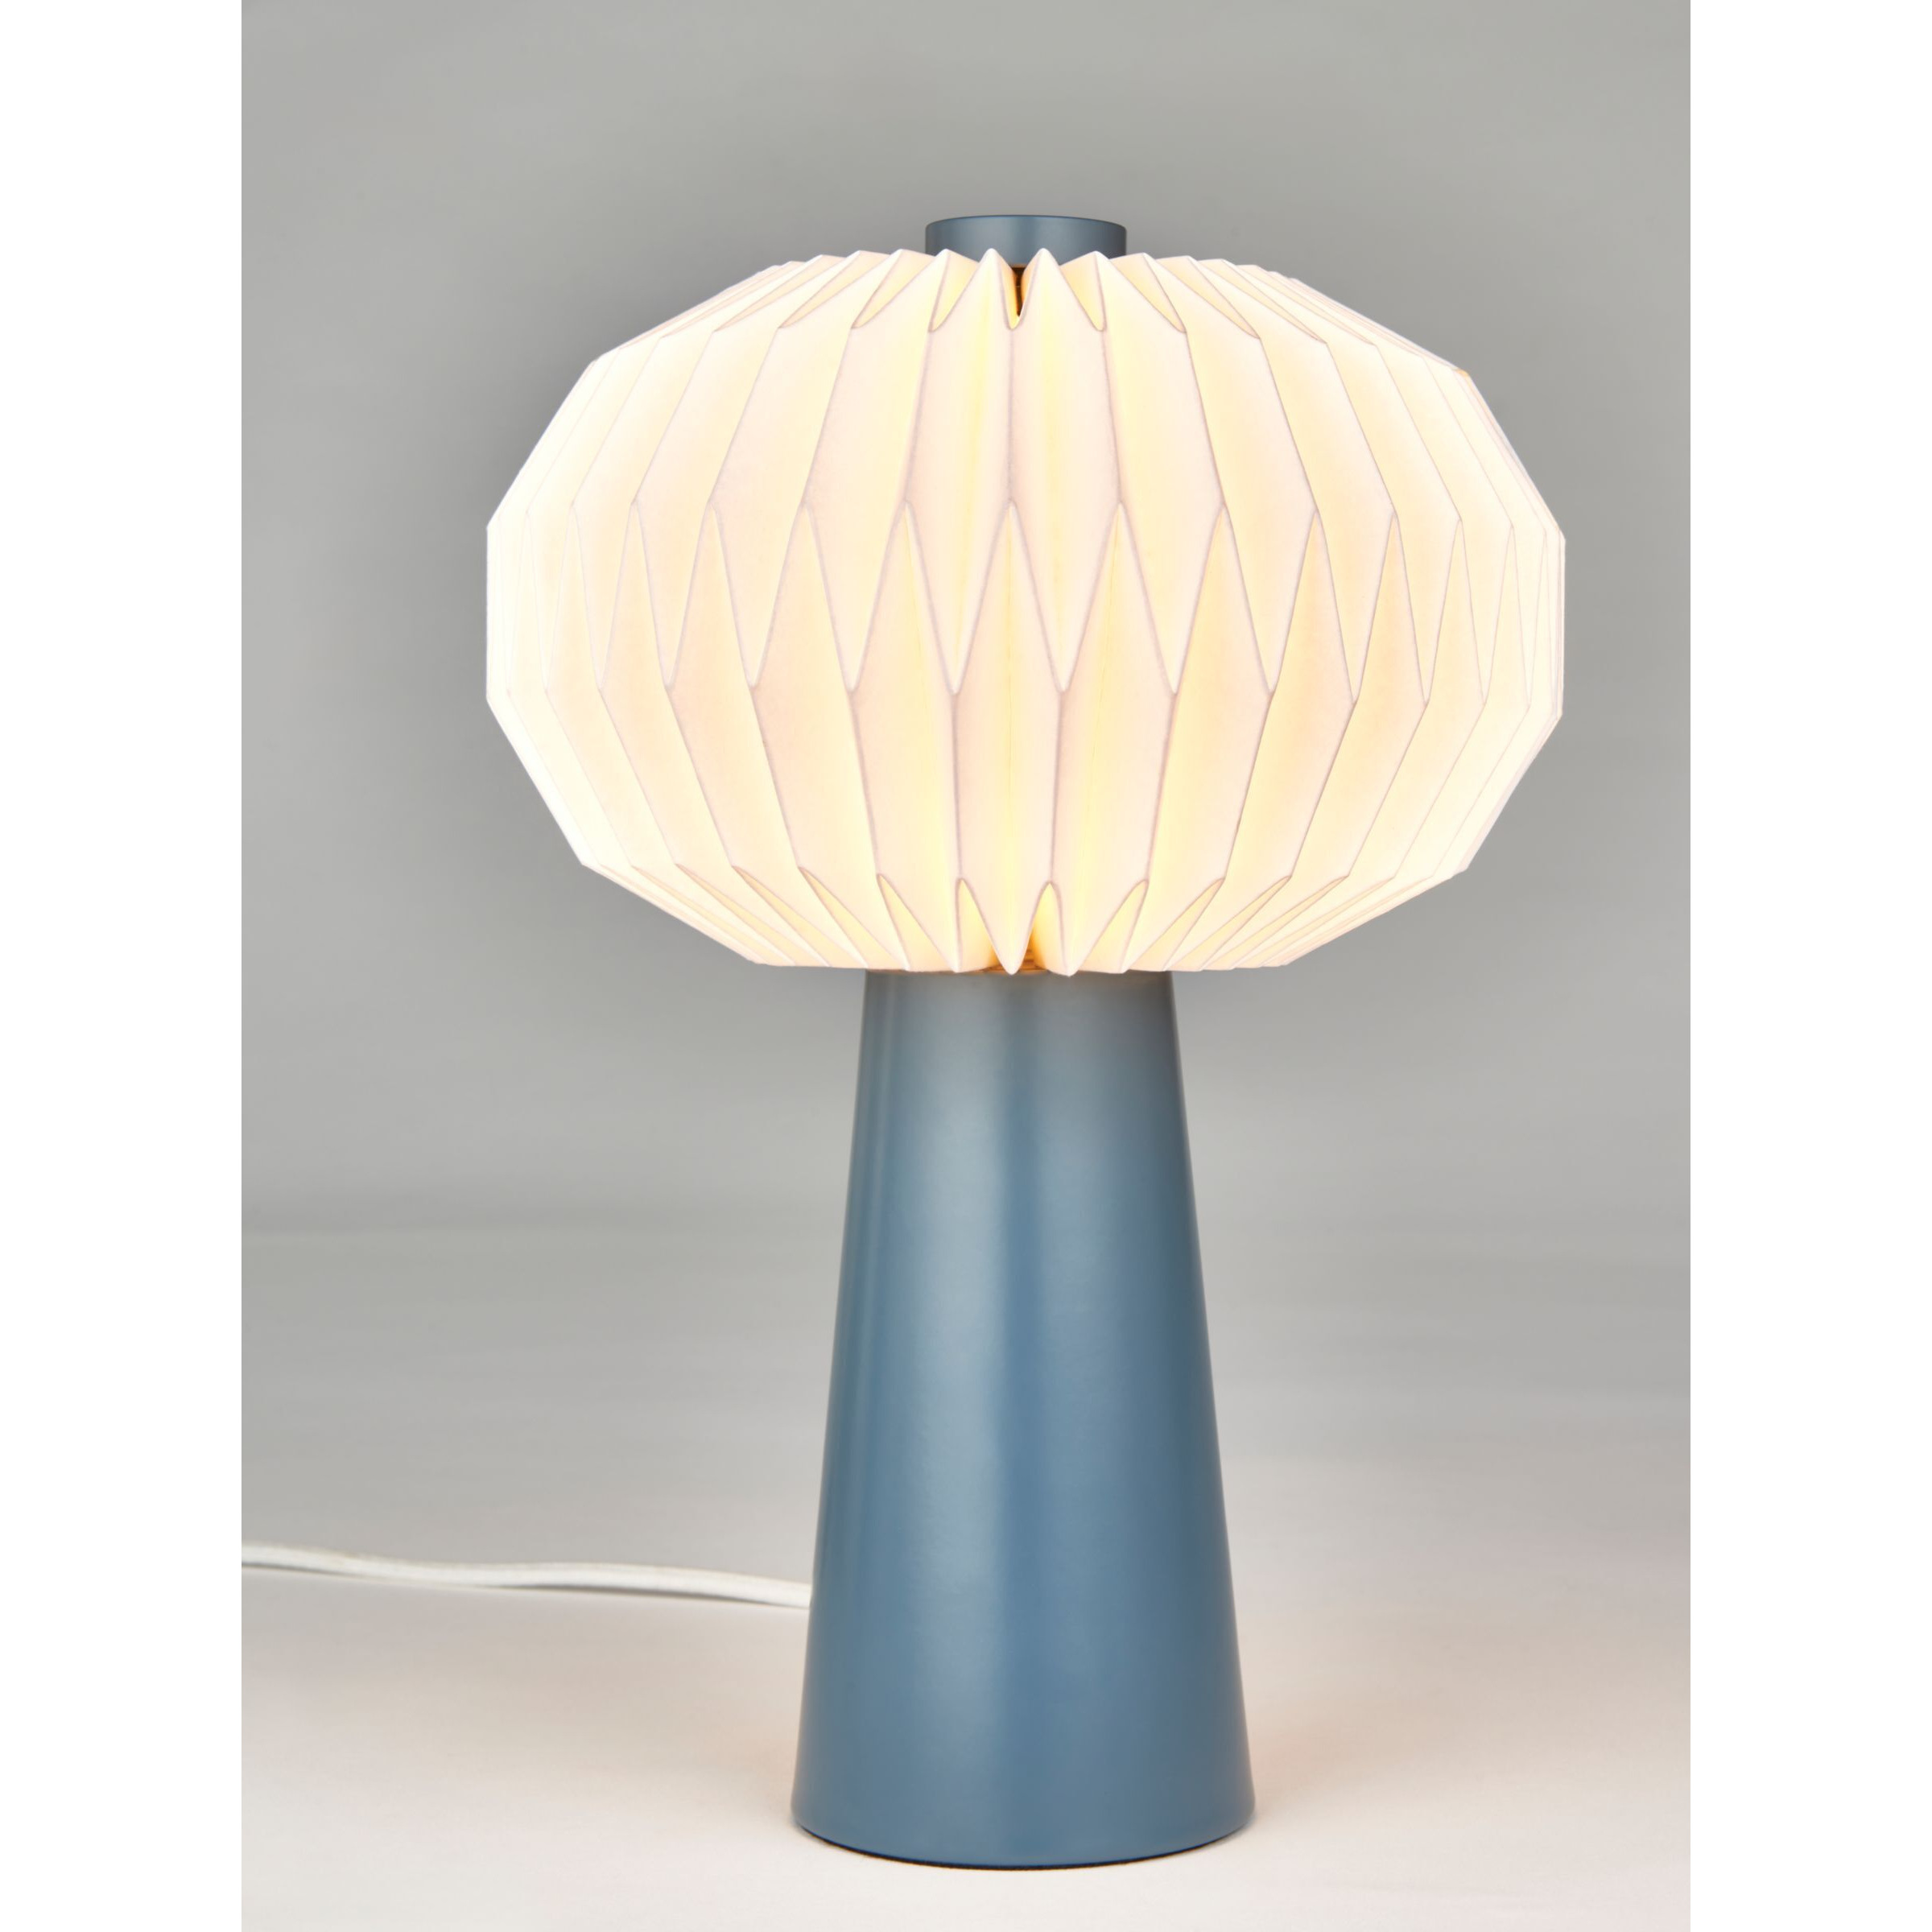 John Lewis Issie Table Lamp - image 1